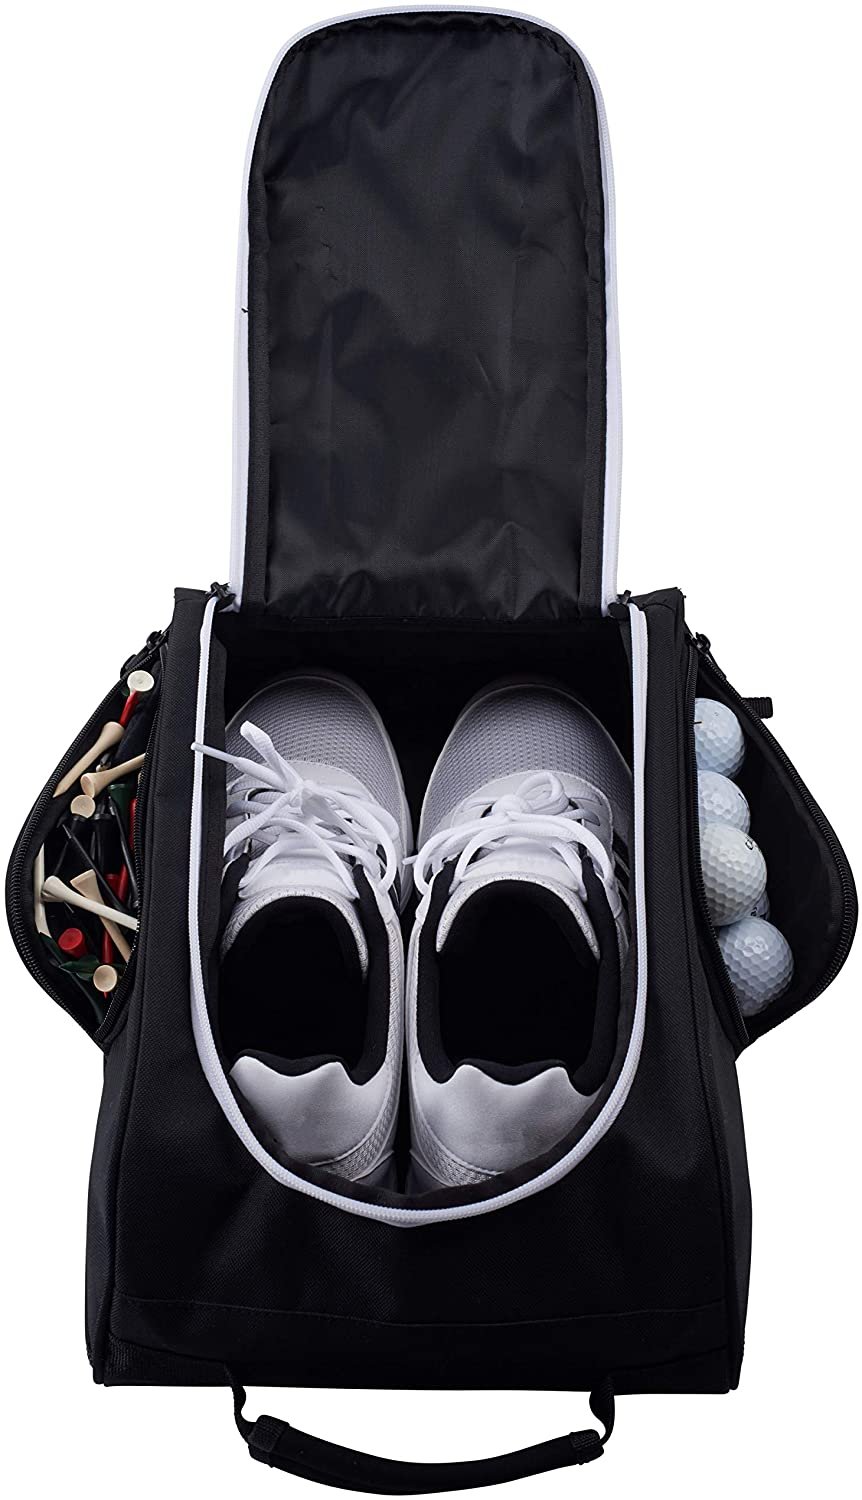 Large Athletico Golf Shoe Bag - Black Zippered Carrier w/ Ventilation & Pocket for Socks, Tees - Free Shipping & Returns